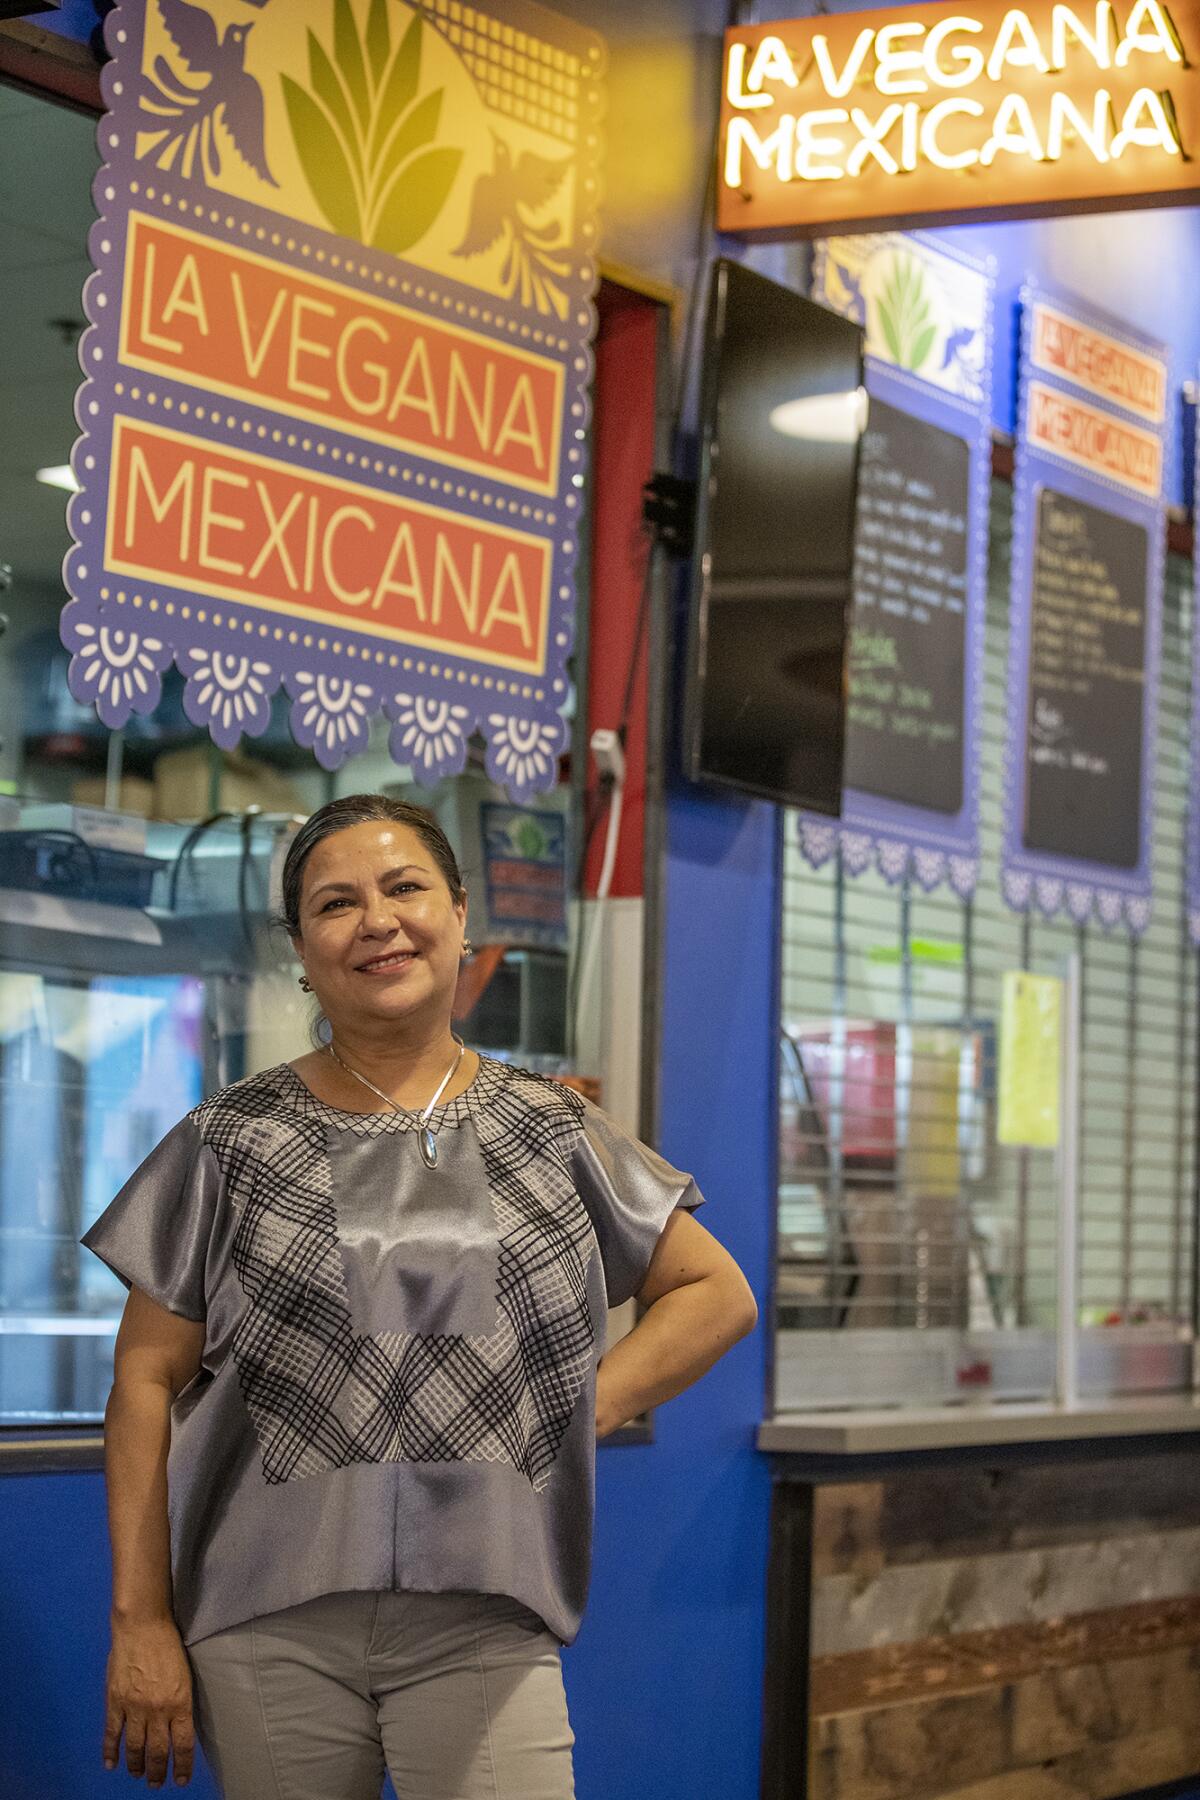 Loreta Ruiz is the owner of La Vegana Mexicana, a vegan Mexican food restaurant in Santa Ana.